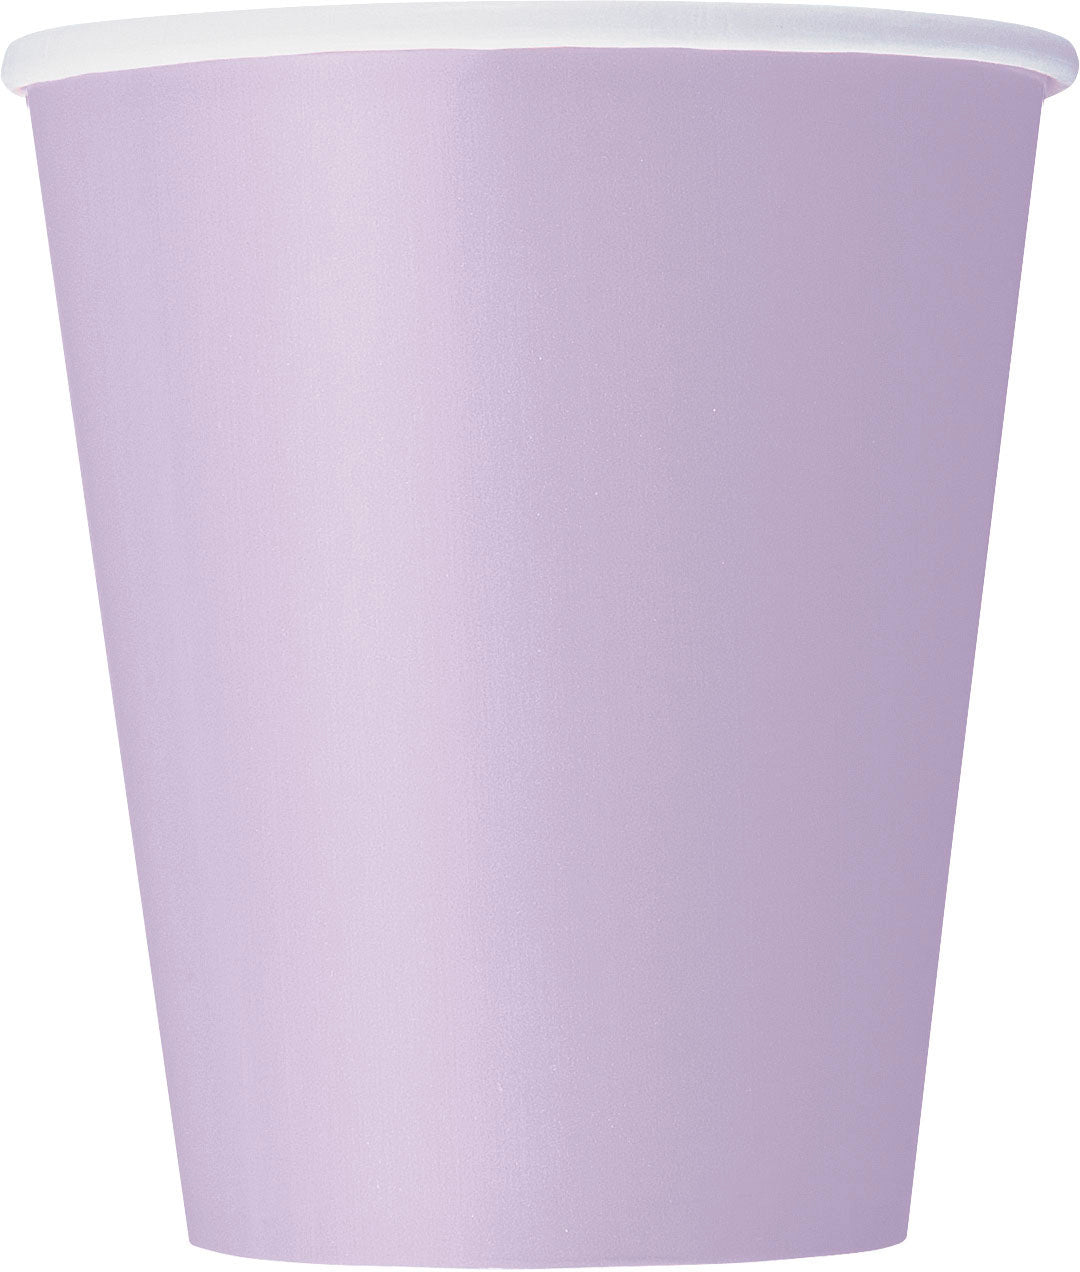 Lavender Solid 9oz Paper Cups, 8ct